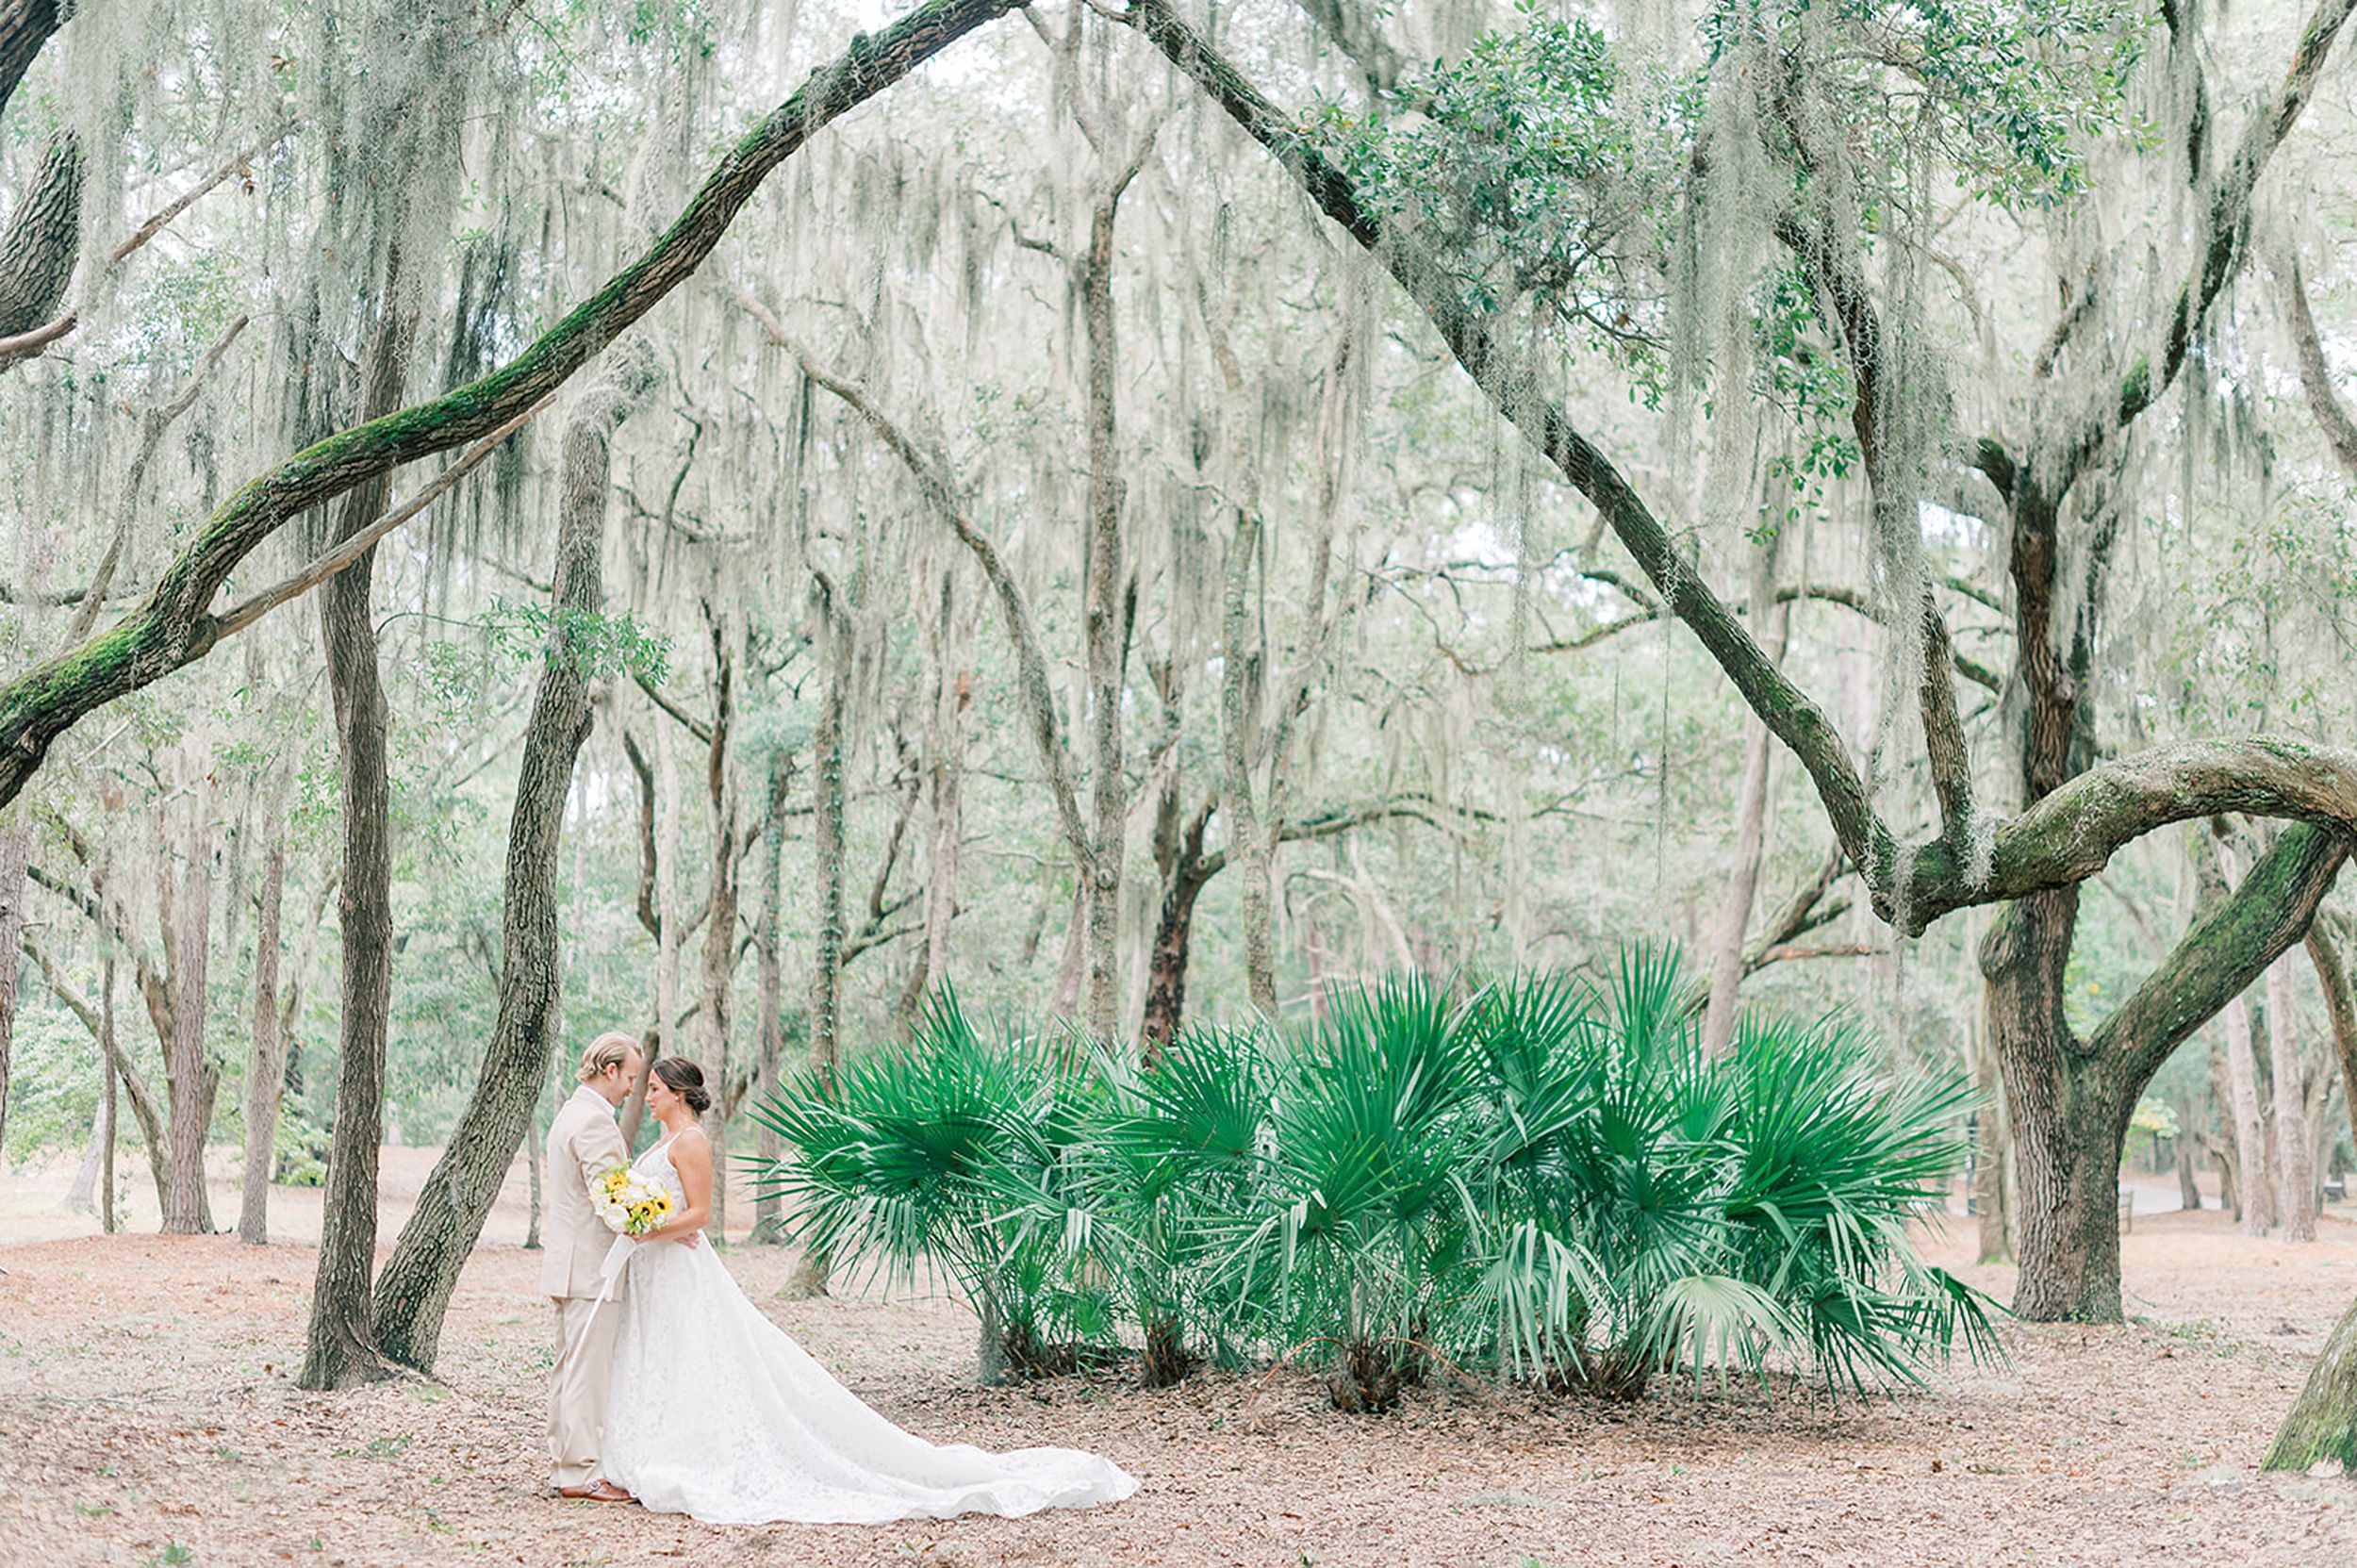 Hilton head bride and groom among trees